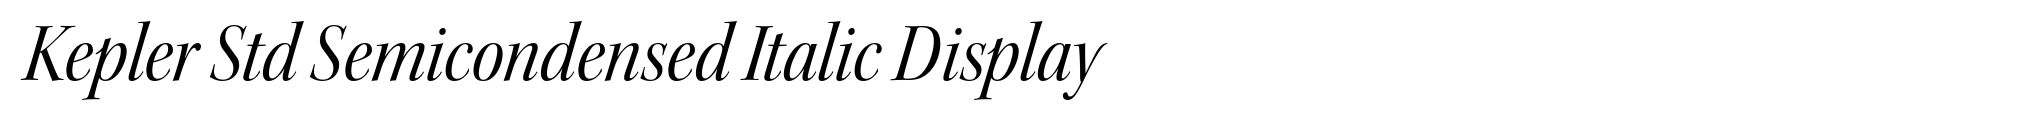 Kepler Std Semicondensed Italic Display image